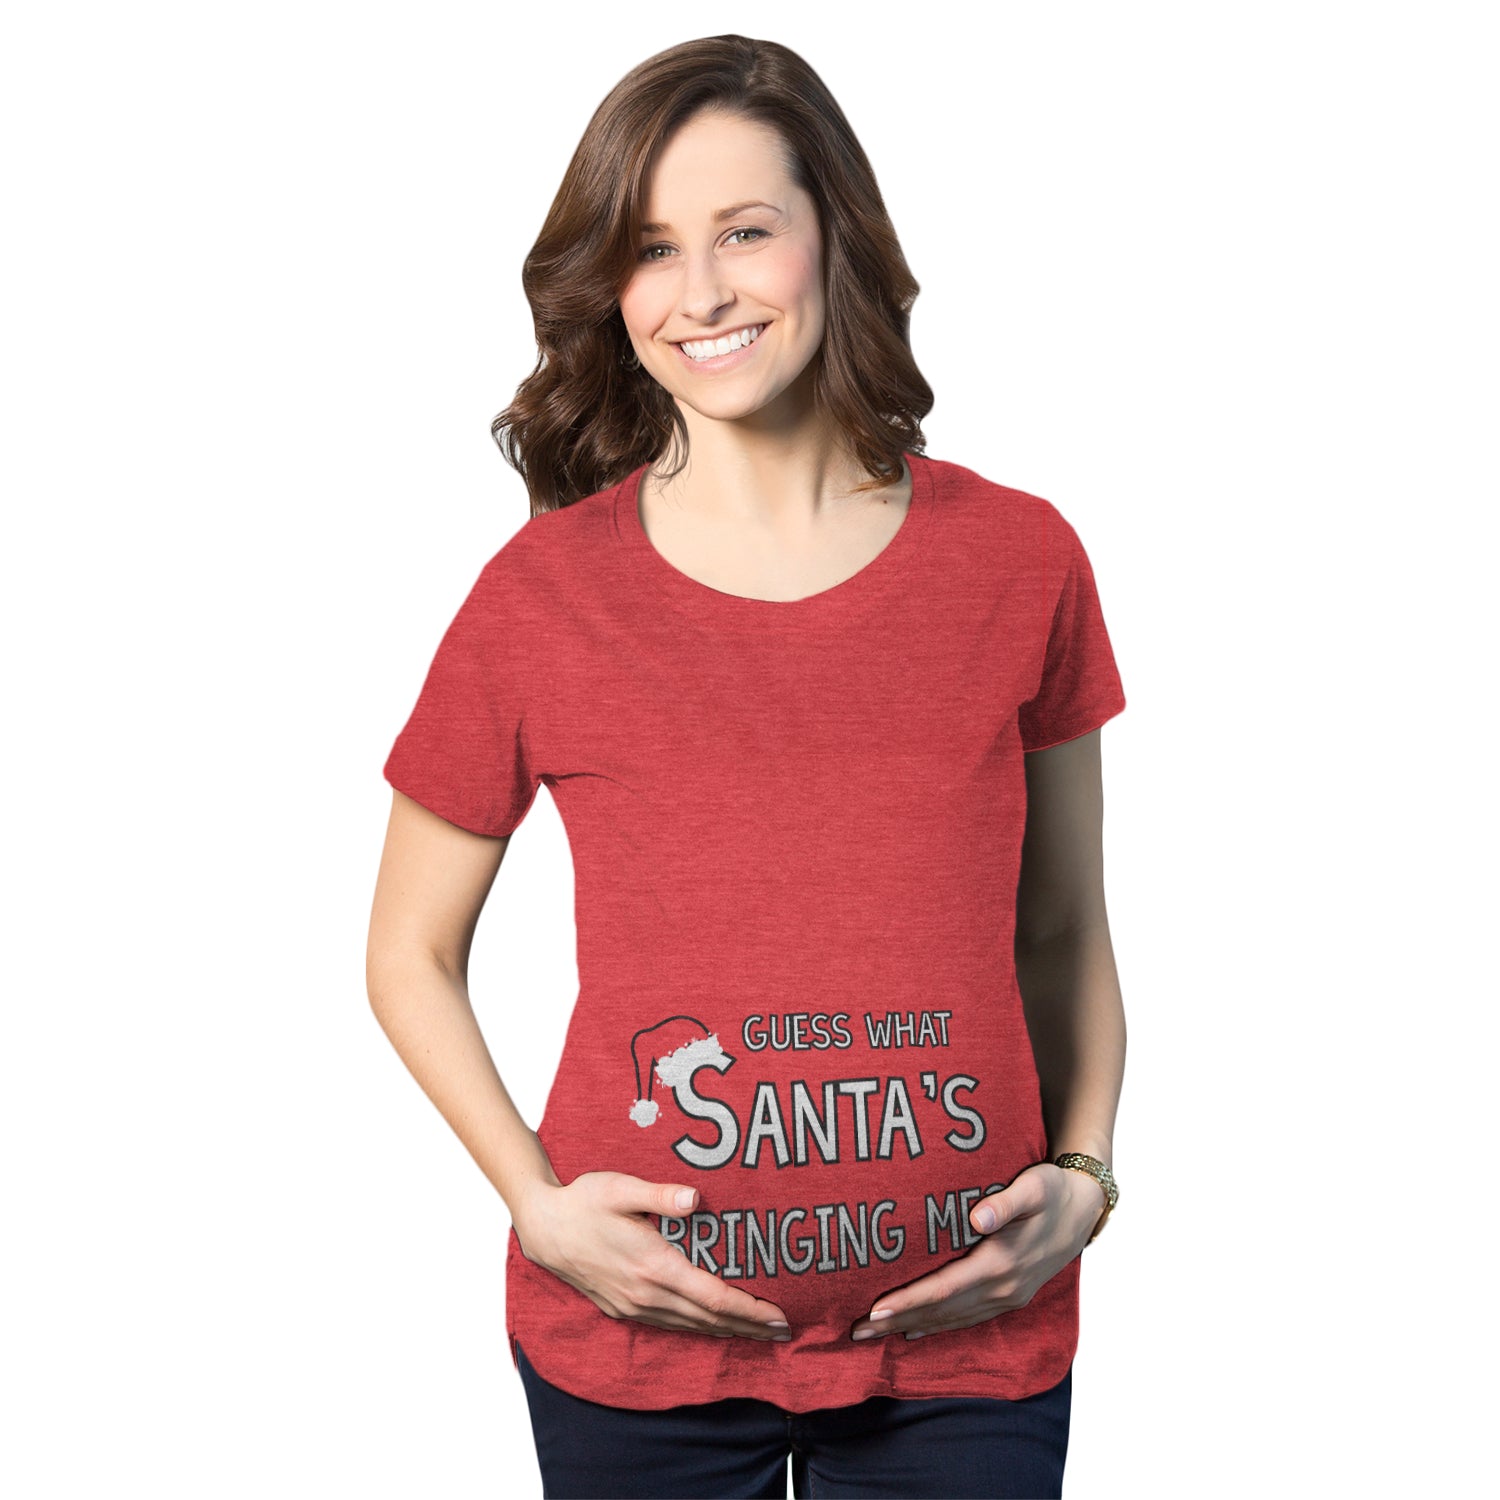 Funny Heather Red - Santa Bringing Me Guess What Santa's Bringing Me Maternity T Shirt Nerdy Christmas Tee